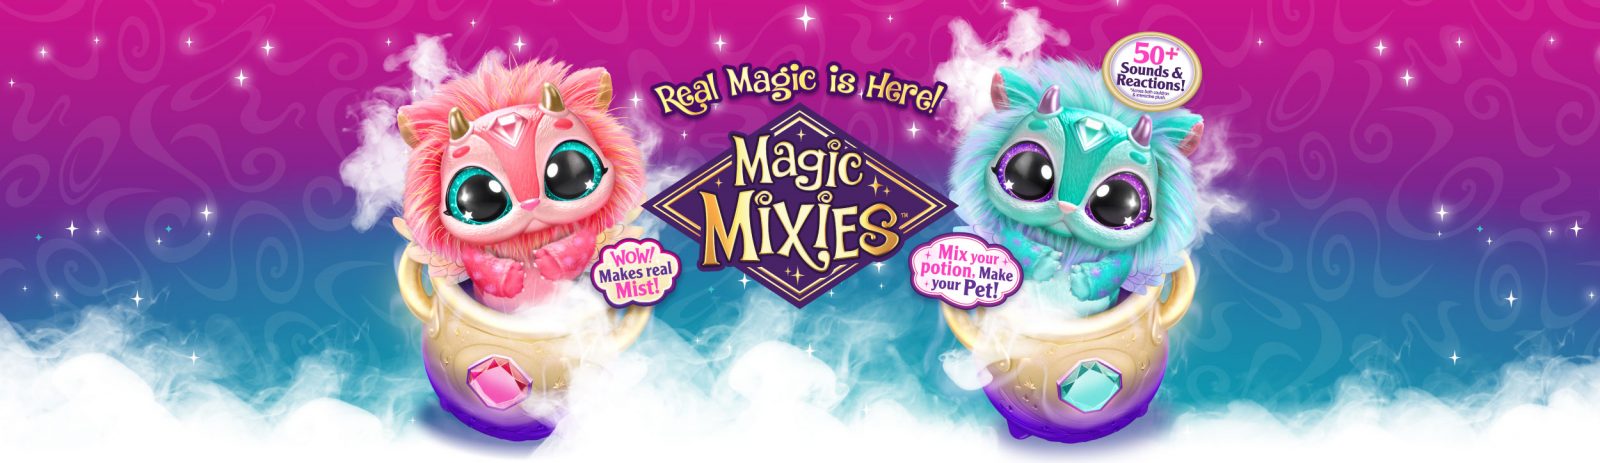 Magic Mixies How-To Video